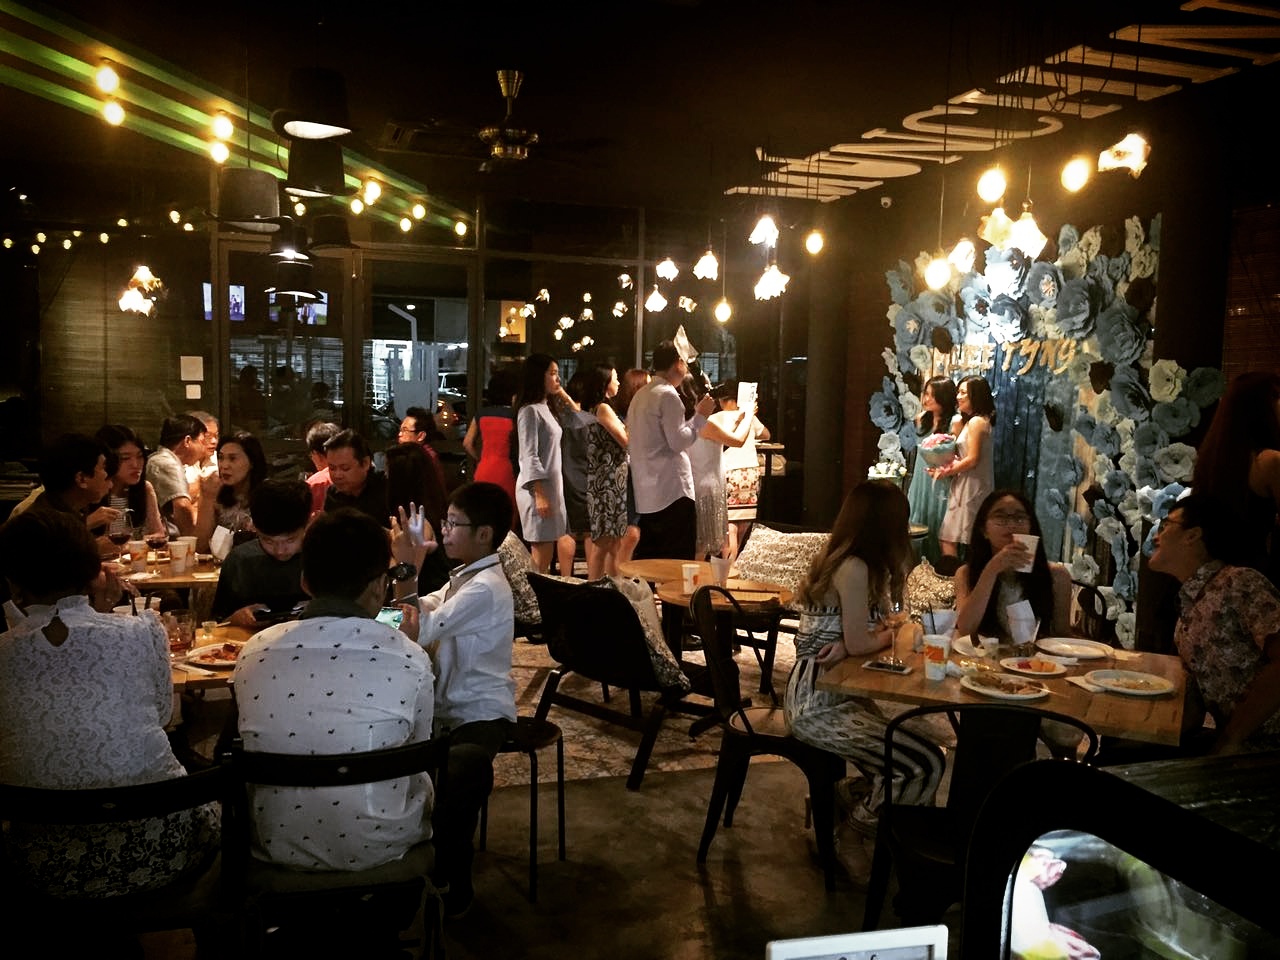 Munching Mob Cafe  Burpple - 10 Reviews - Bukit Jalil, Malaysia